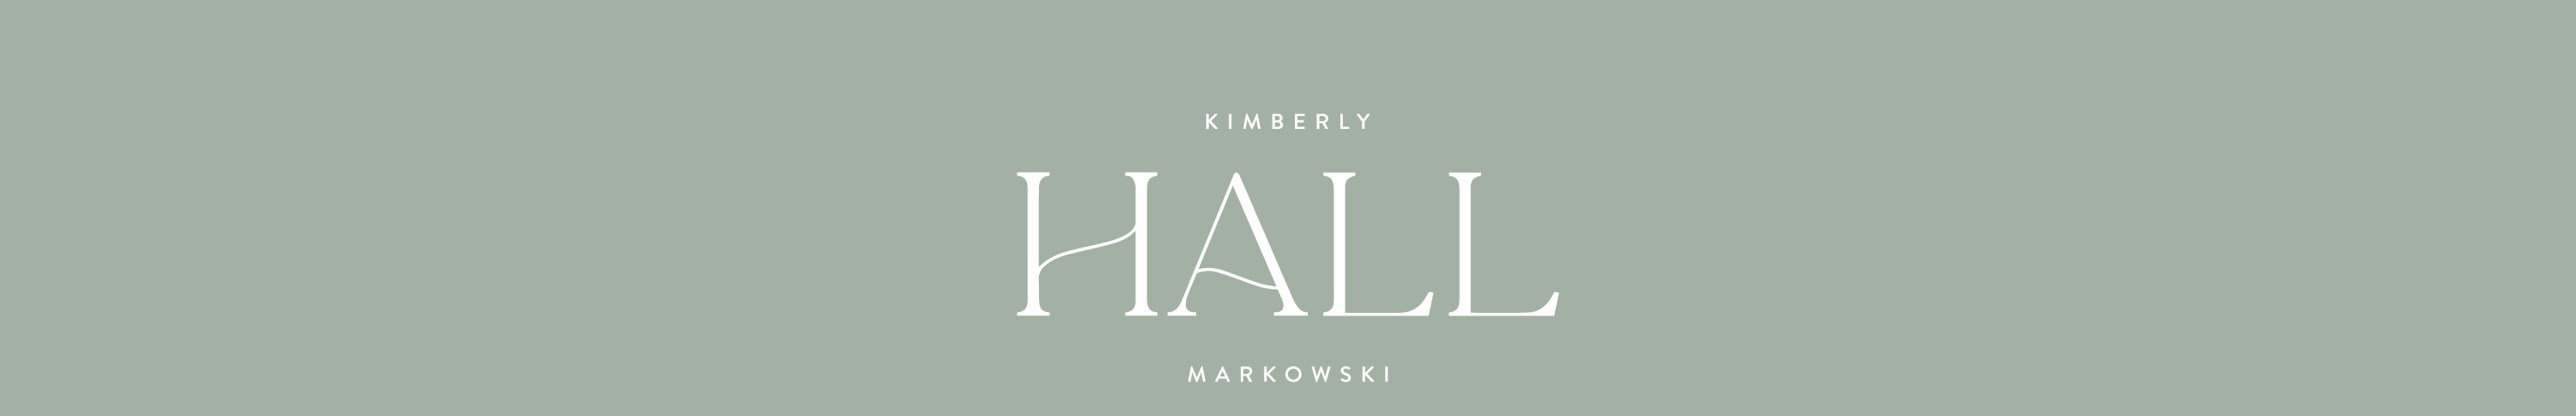 Kimberly Hall's profile banner